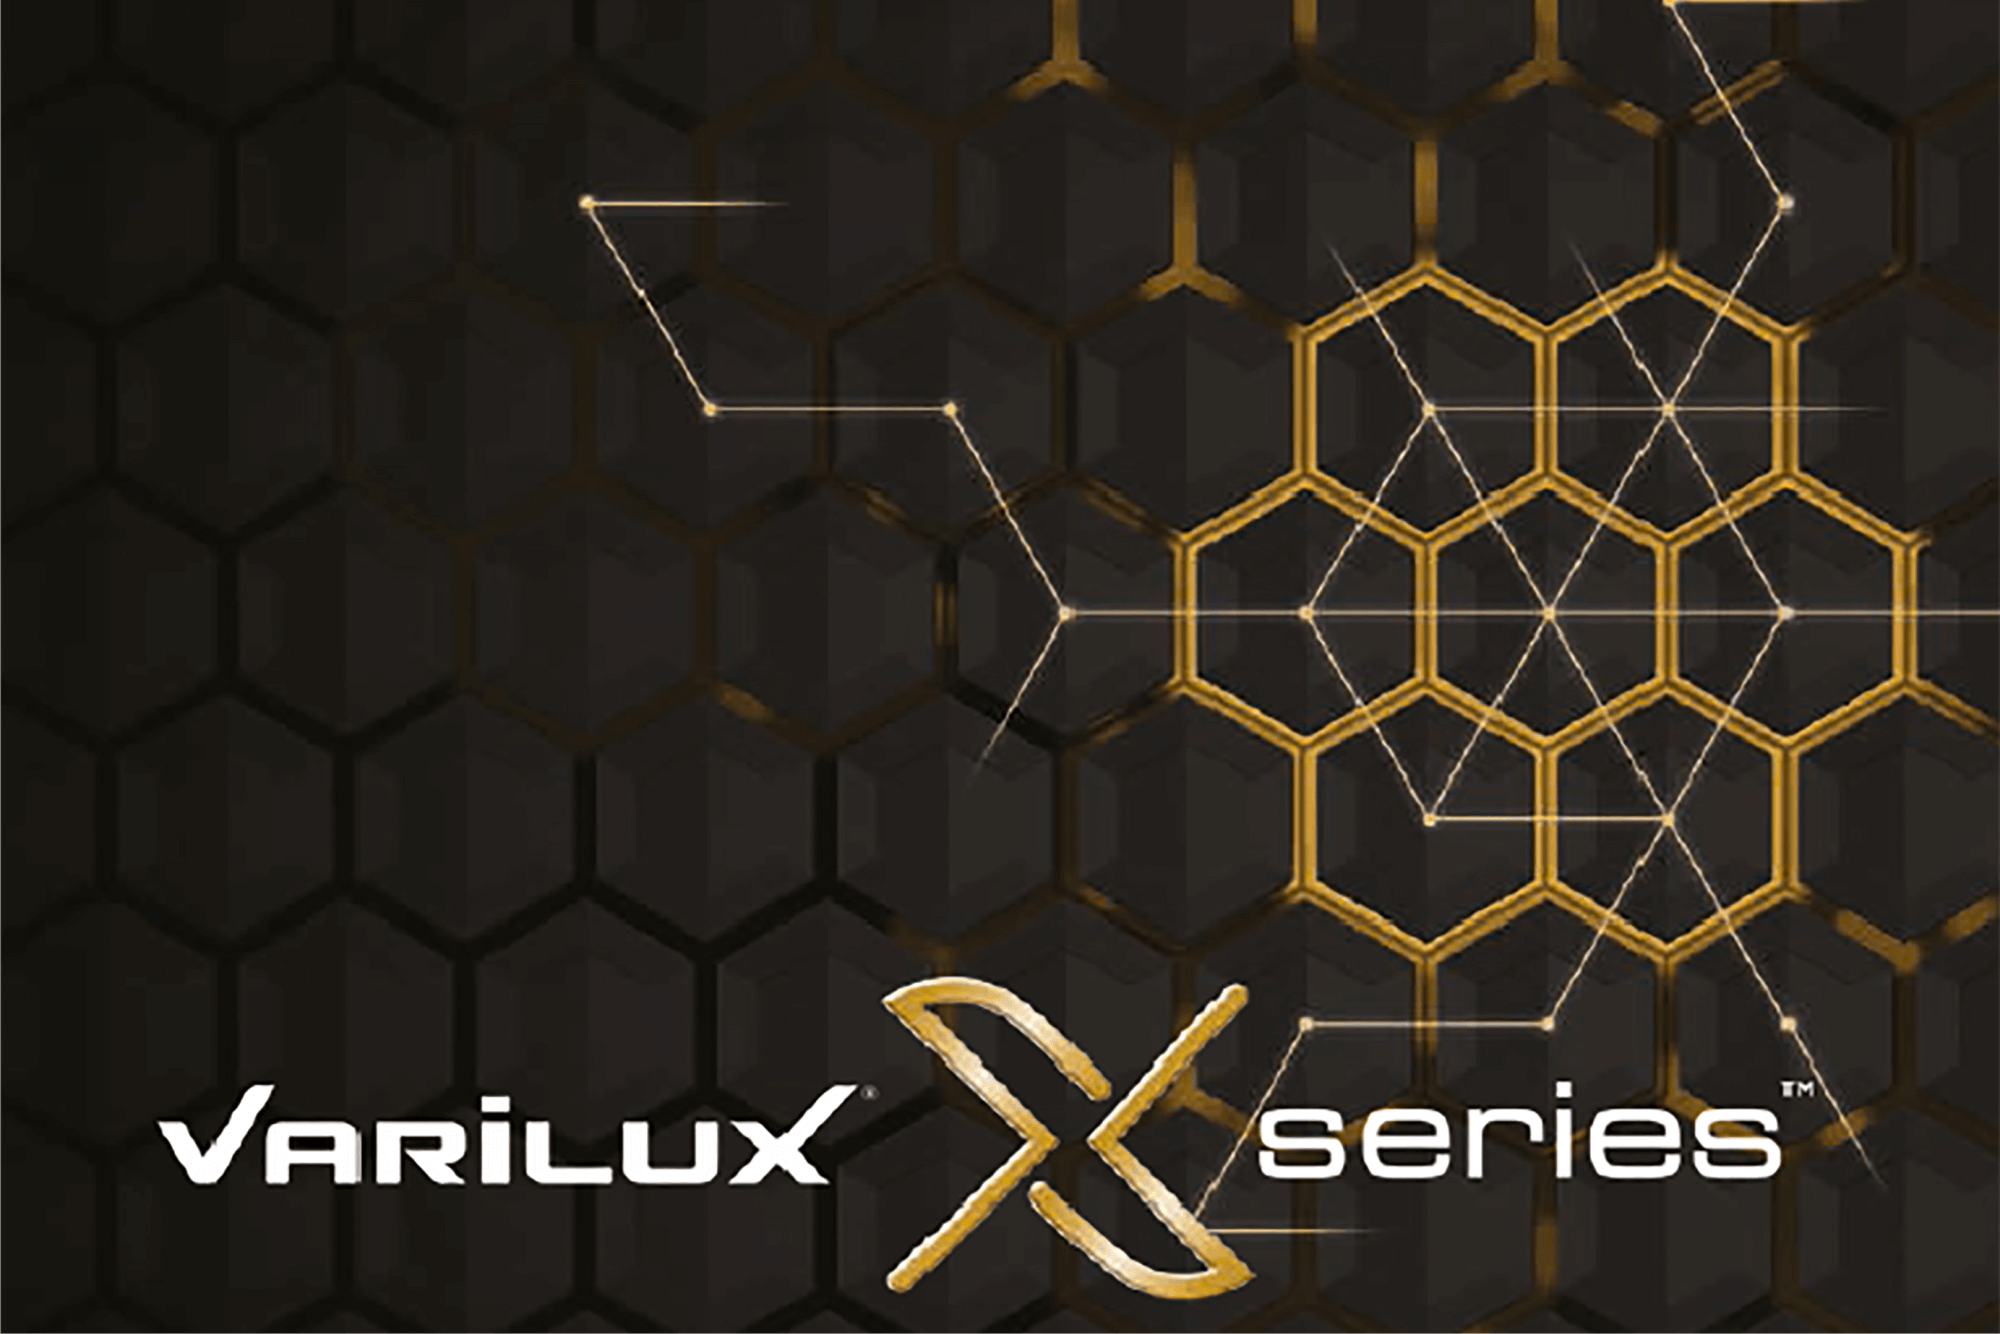 Varilux x series